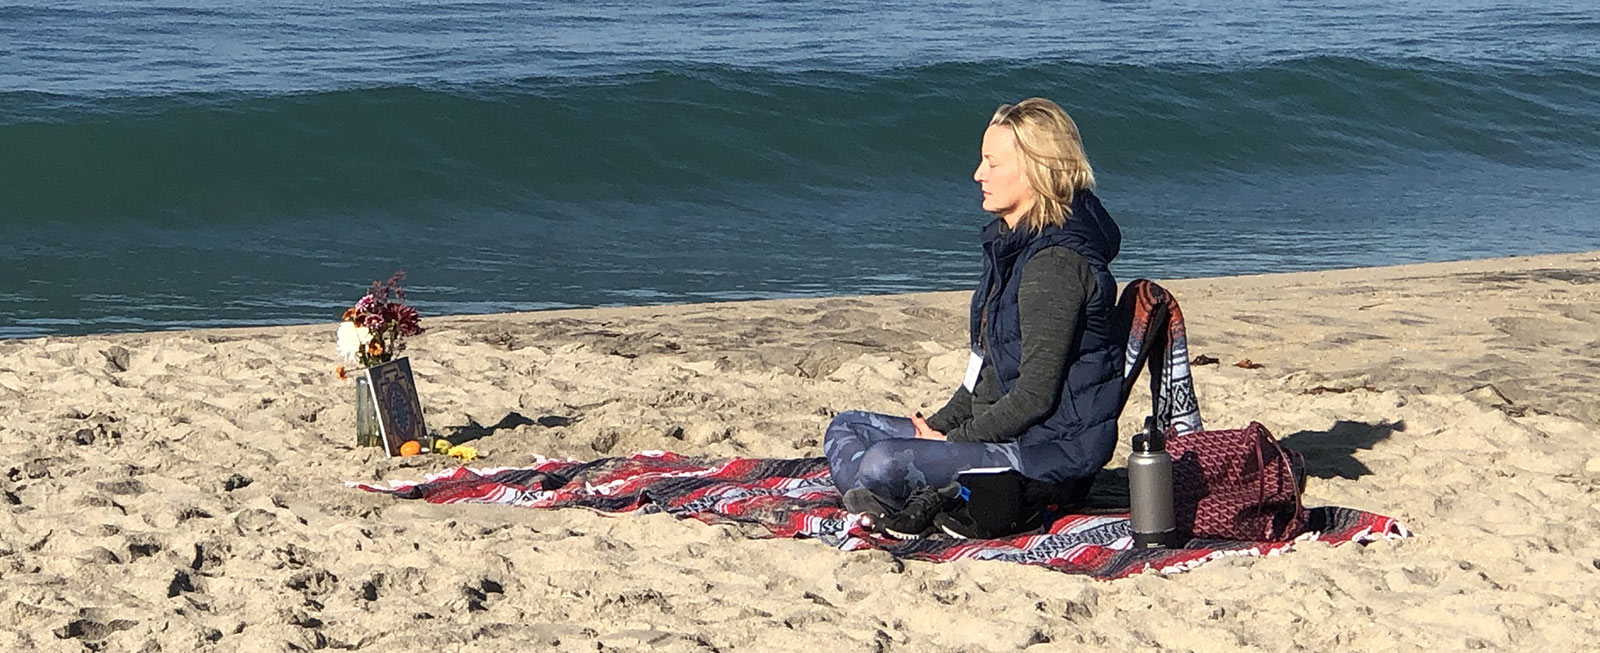 Elizabeth meditates on beach with ocean in background